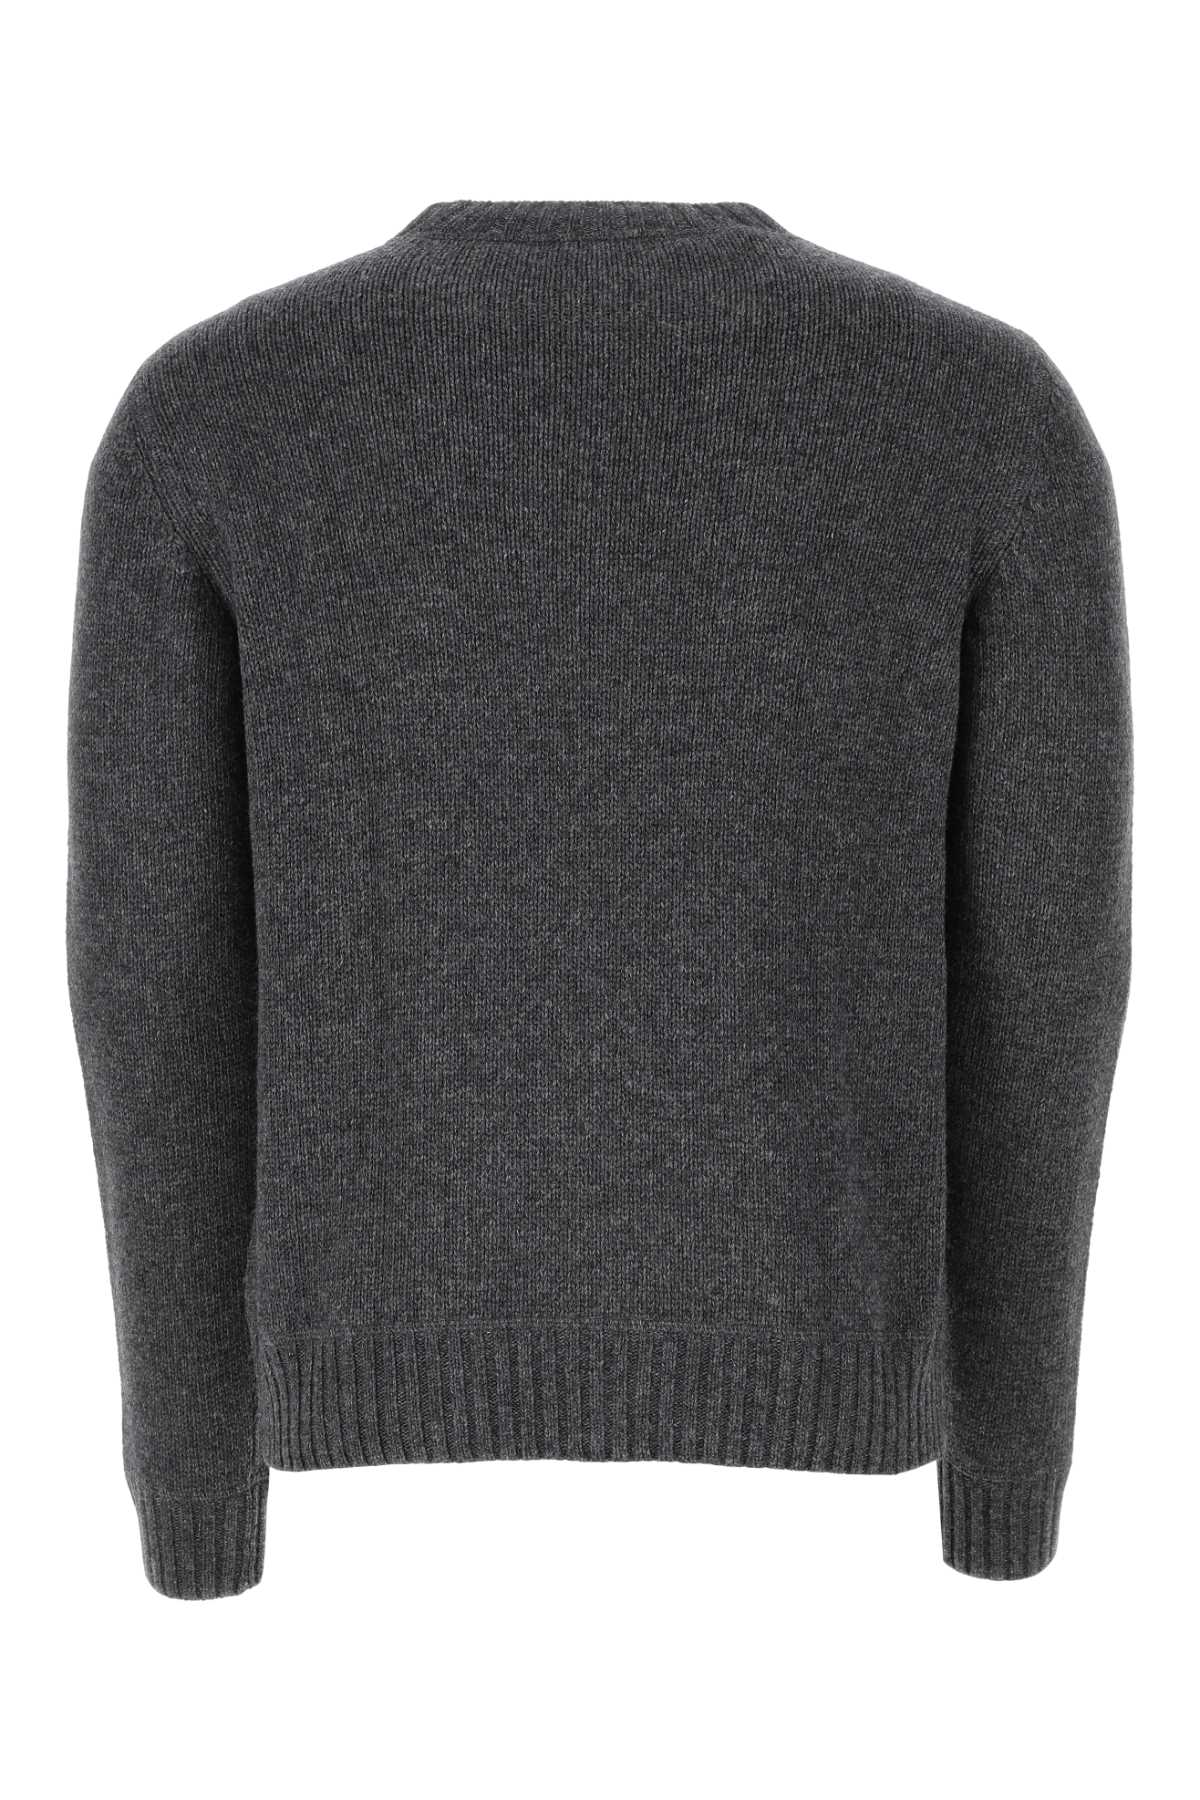 Prada Dark Grey Wool Blend Sweater In Ardesia